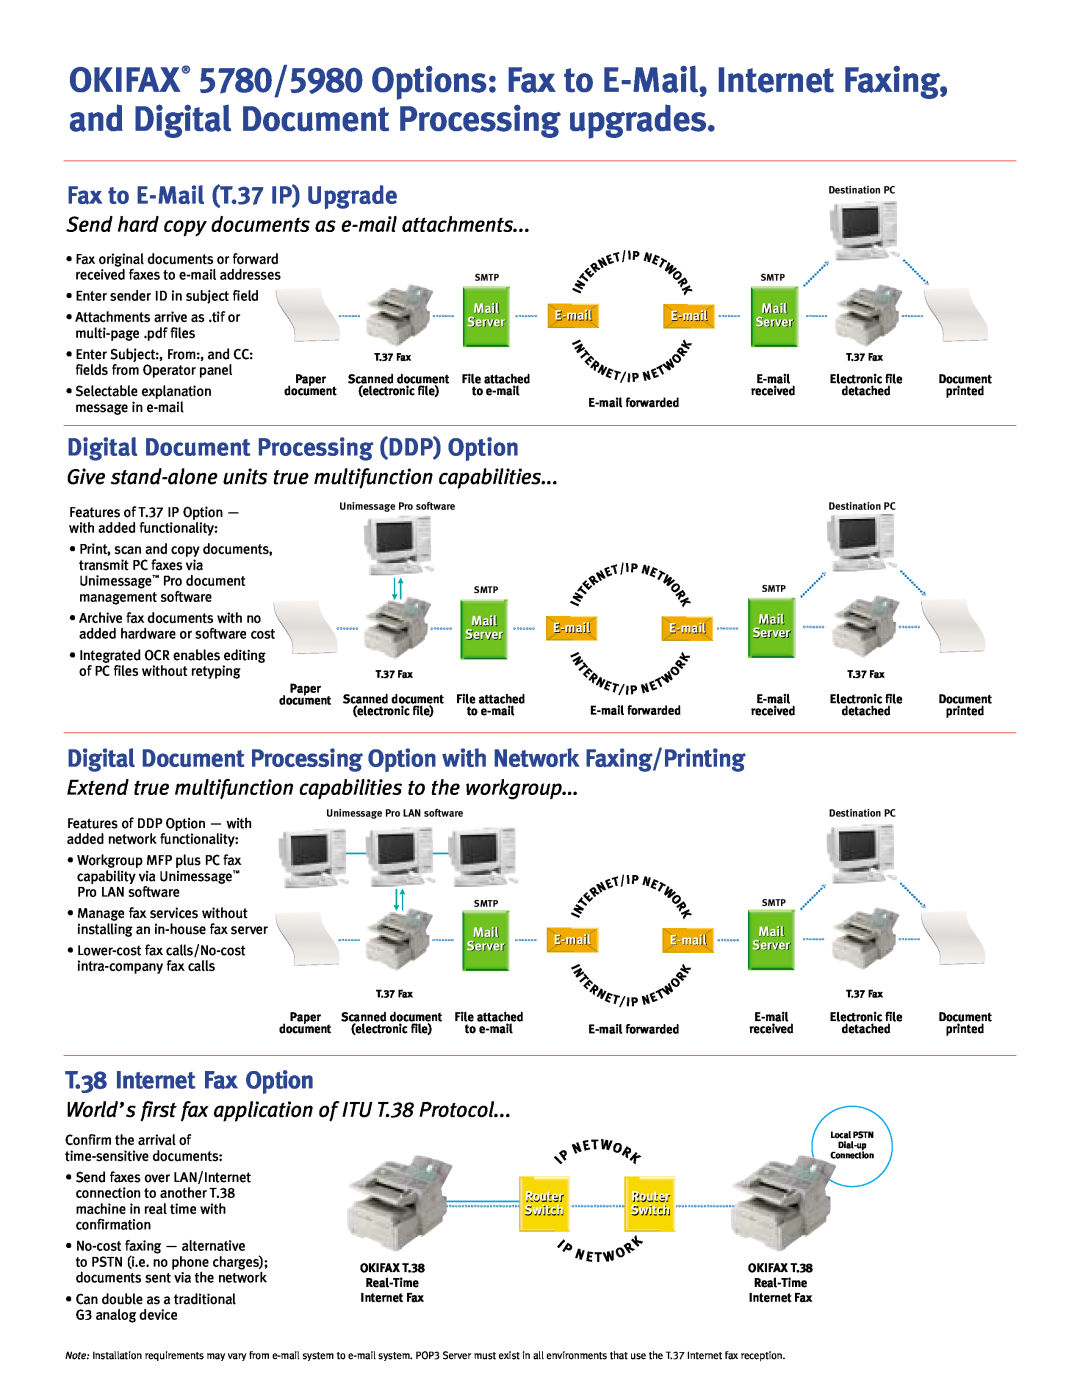 Oki 5980 warranty Fax to E-MailT.37 IP Upgrade, Digital Document Processing DDP Option, T.38 Internet Fax Option 